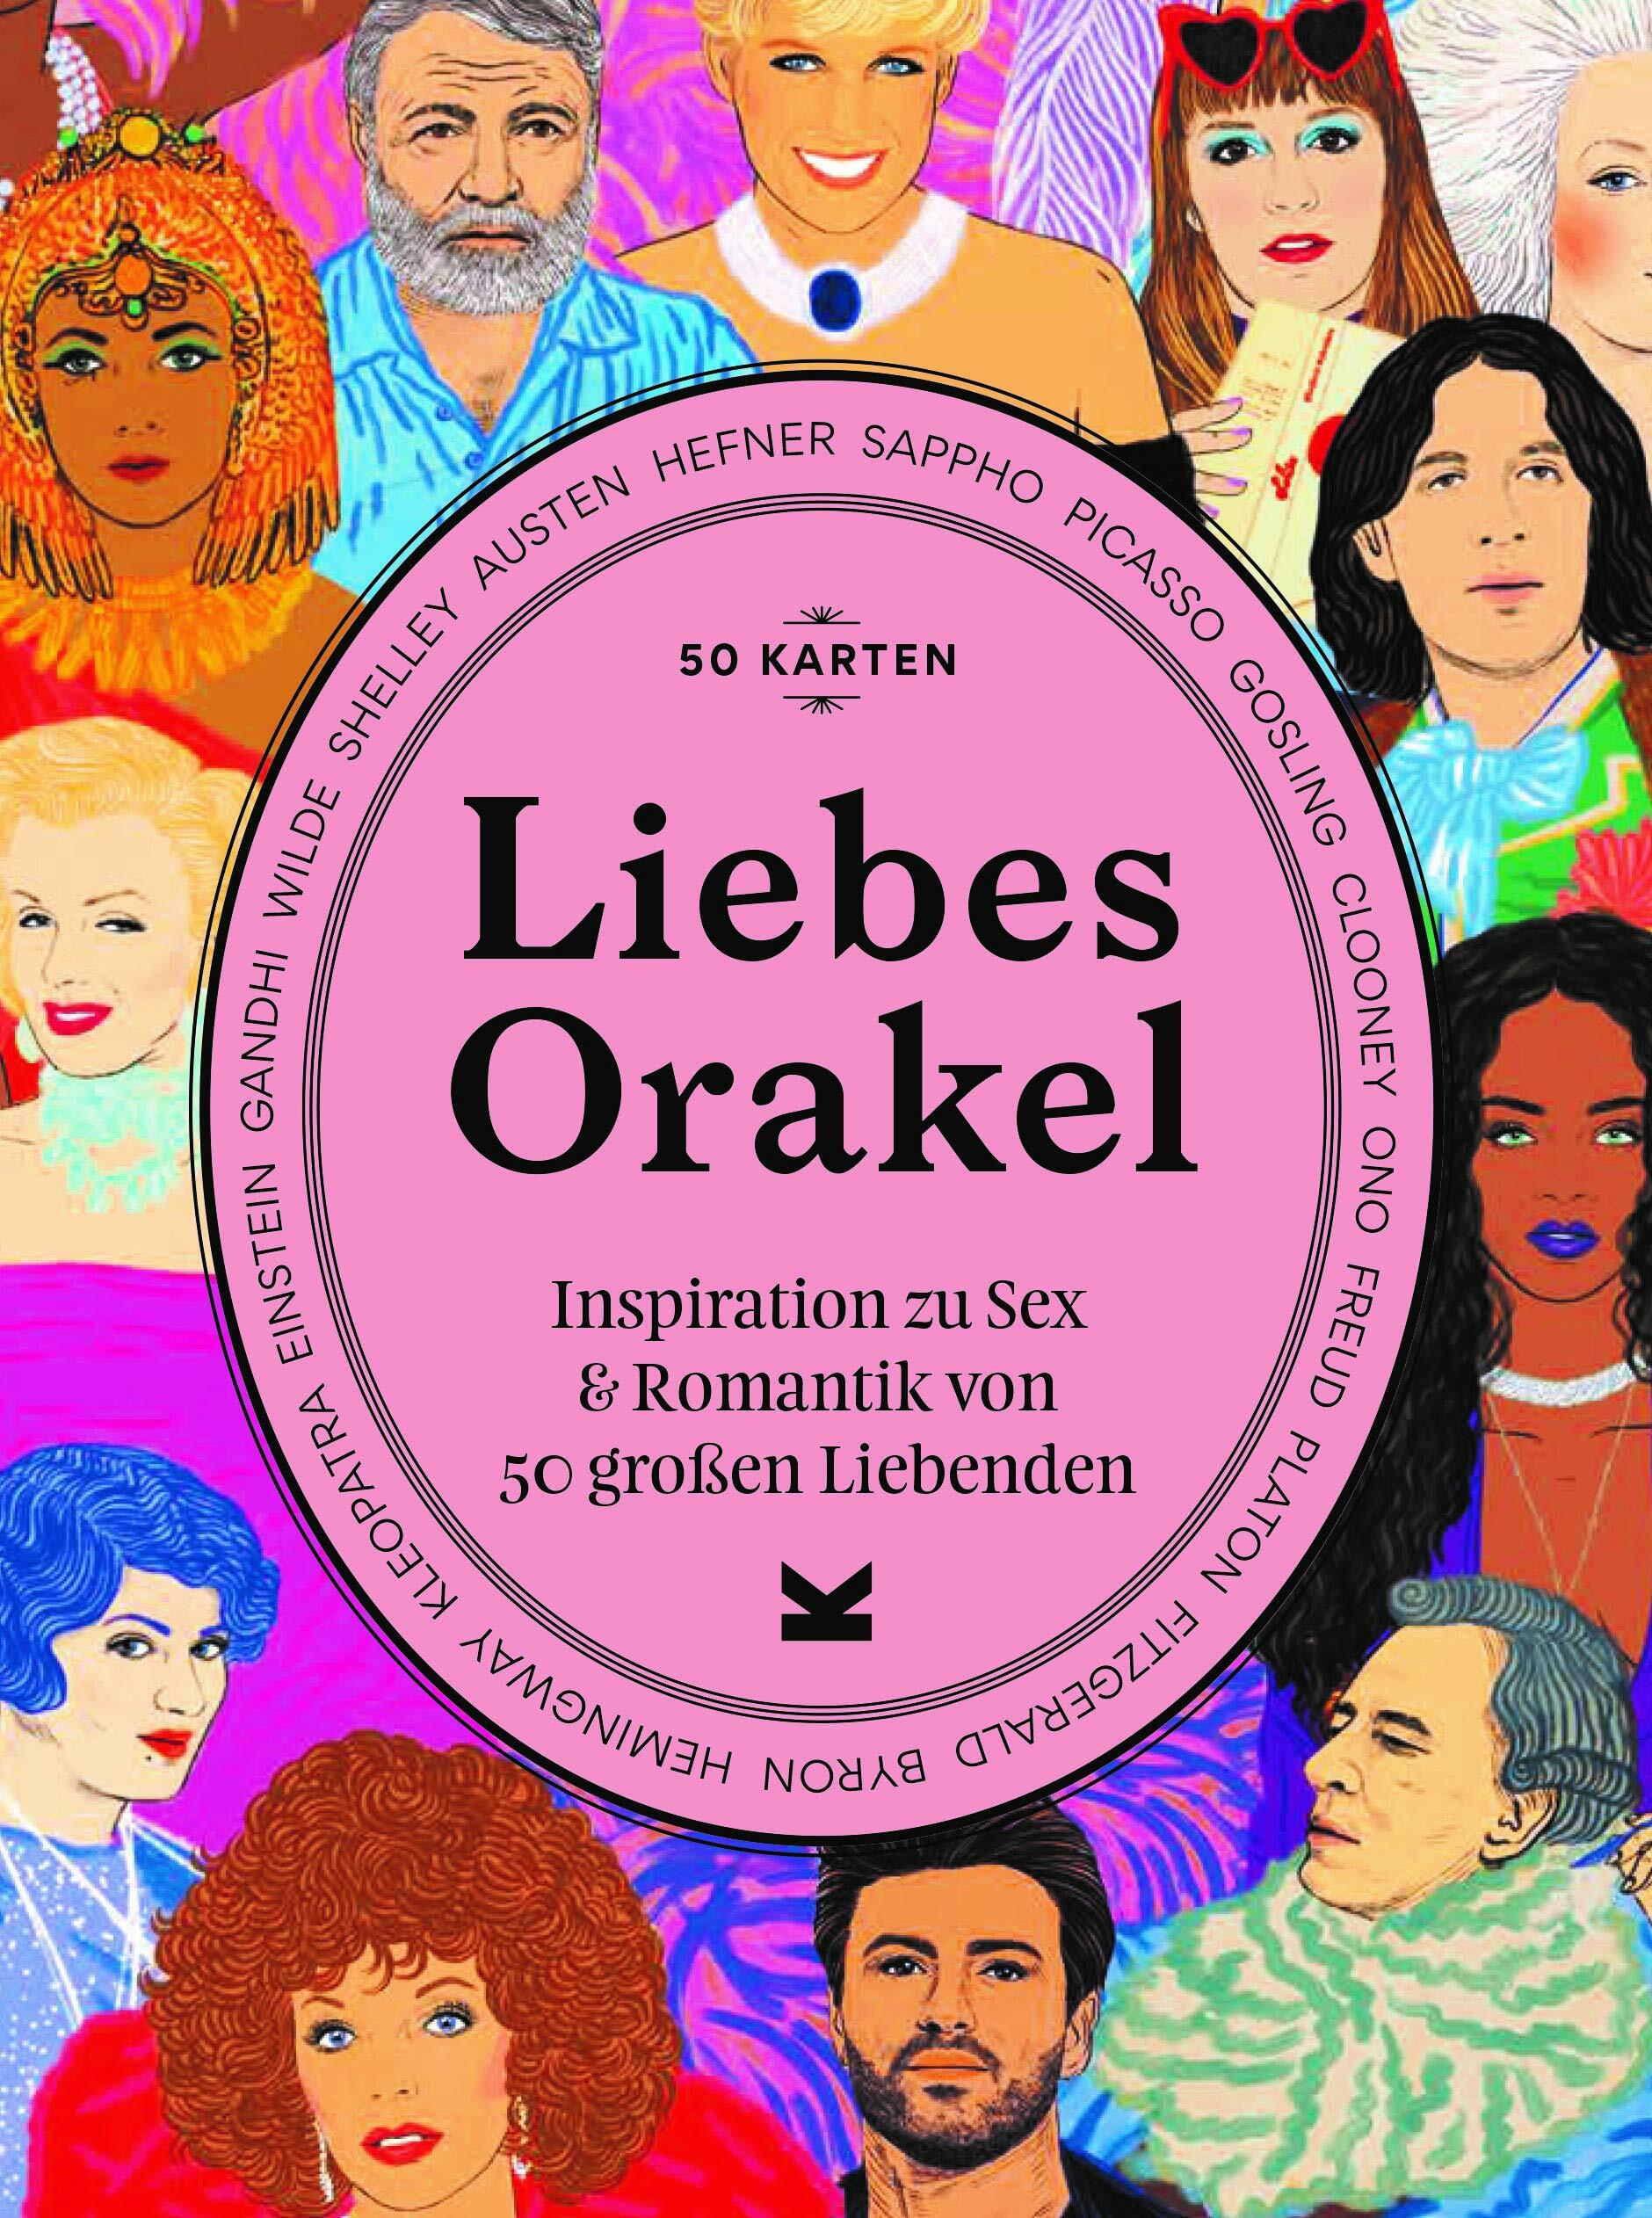 Liebes-Orakel (General Merchandise)